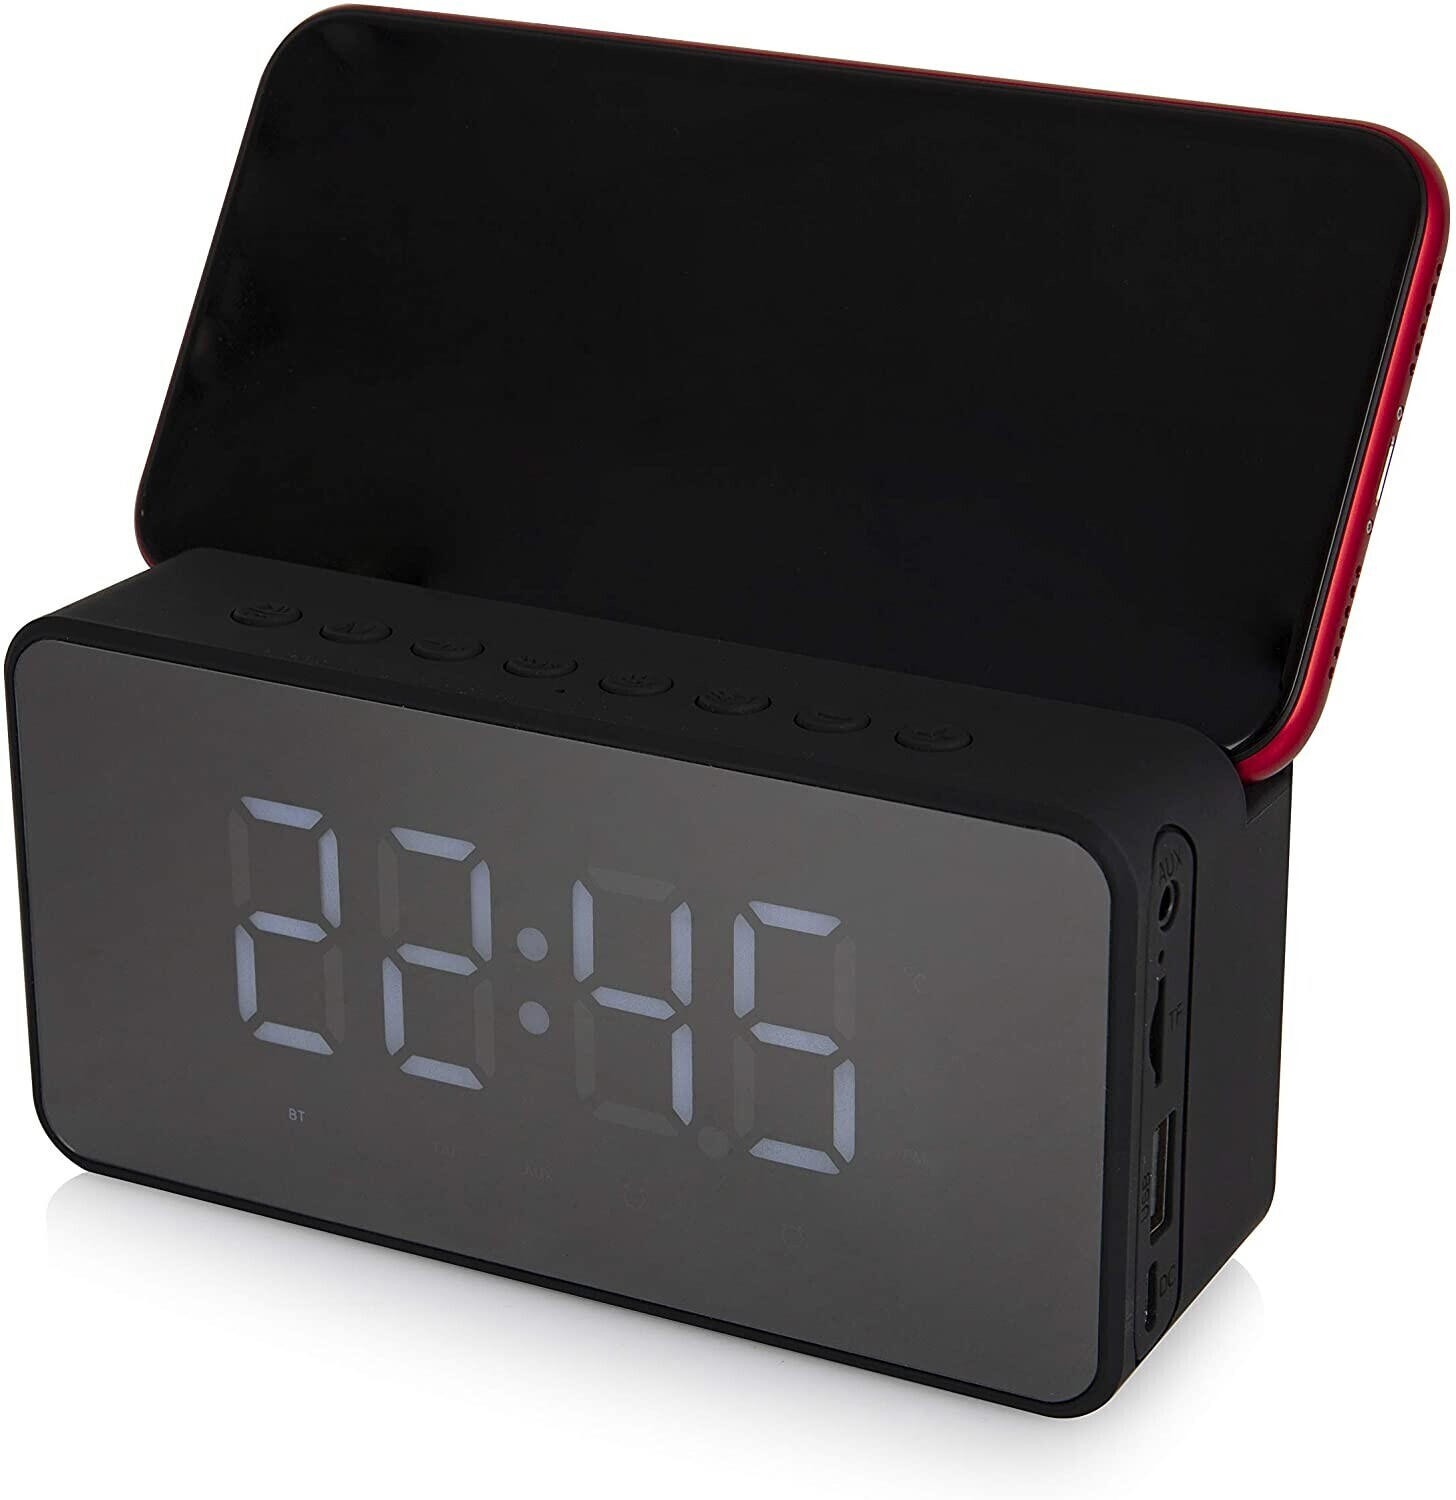 Akai Core Alarm CLock with Bluetooth Speaker Black